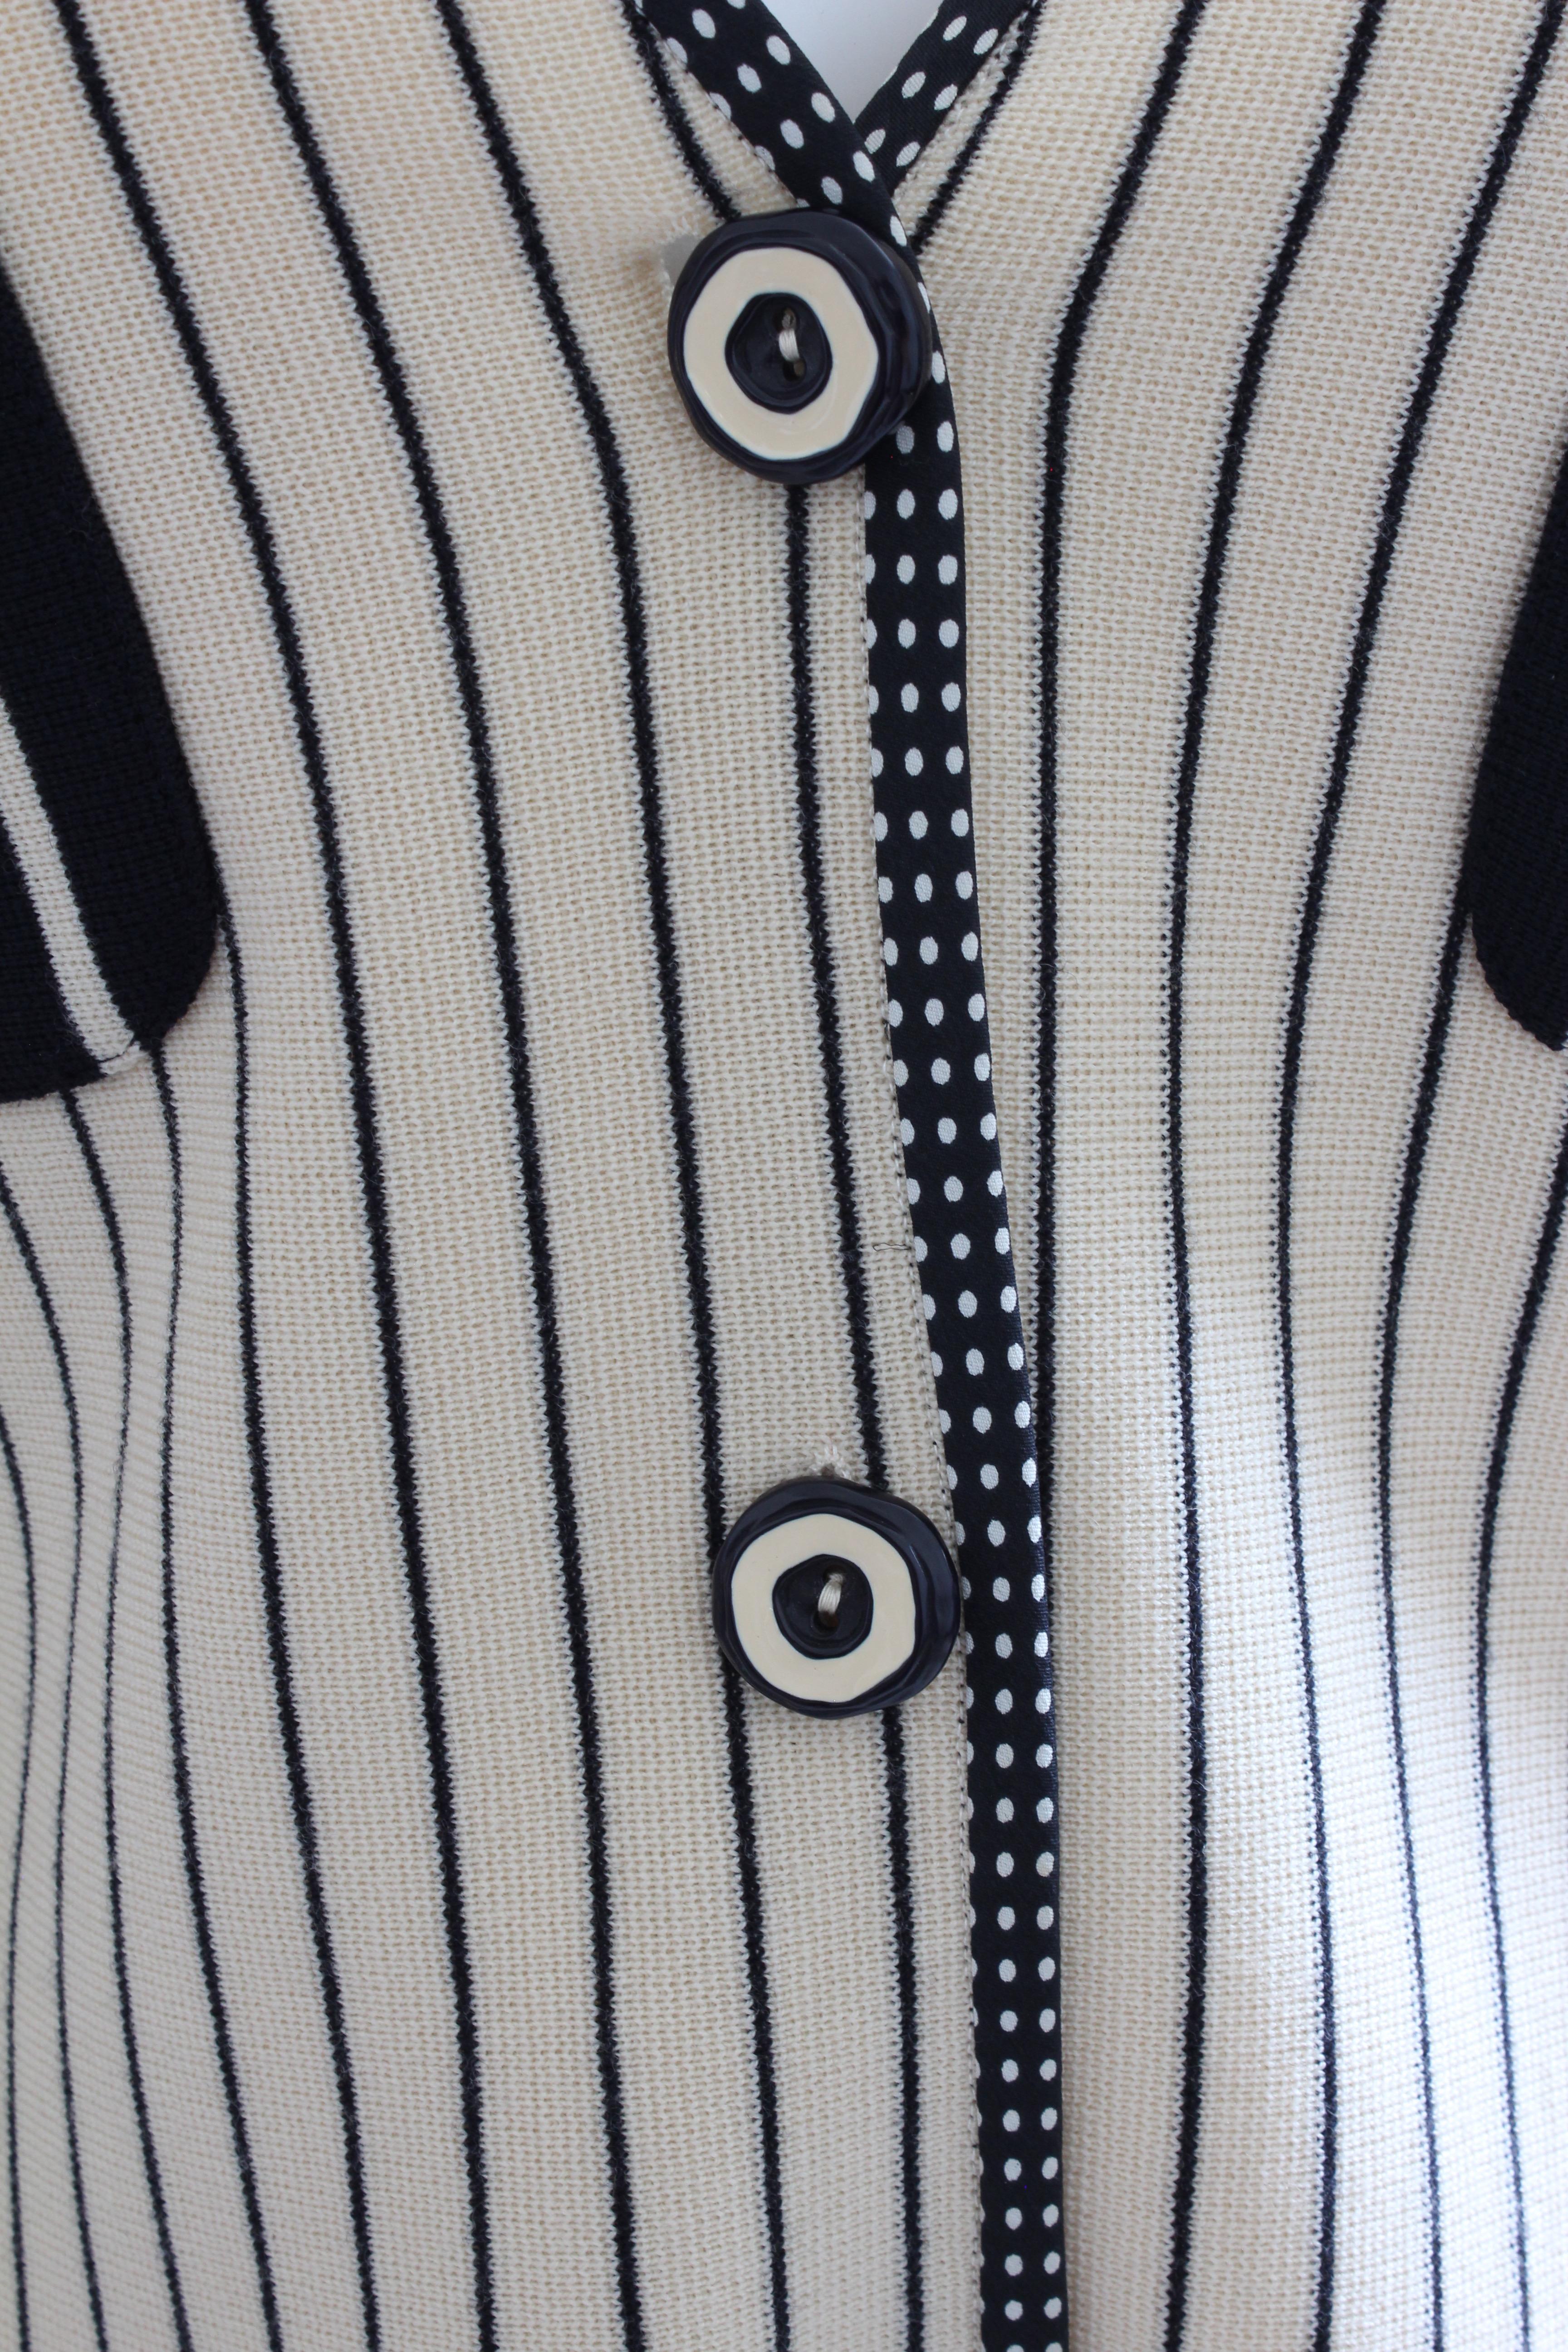 Ungaro Parallele Striped Patch Pocket Sweater Jacket Black & White Knit Size S 1